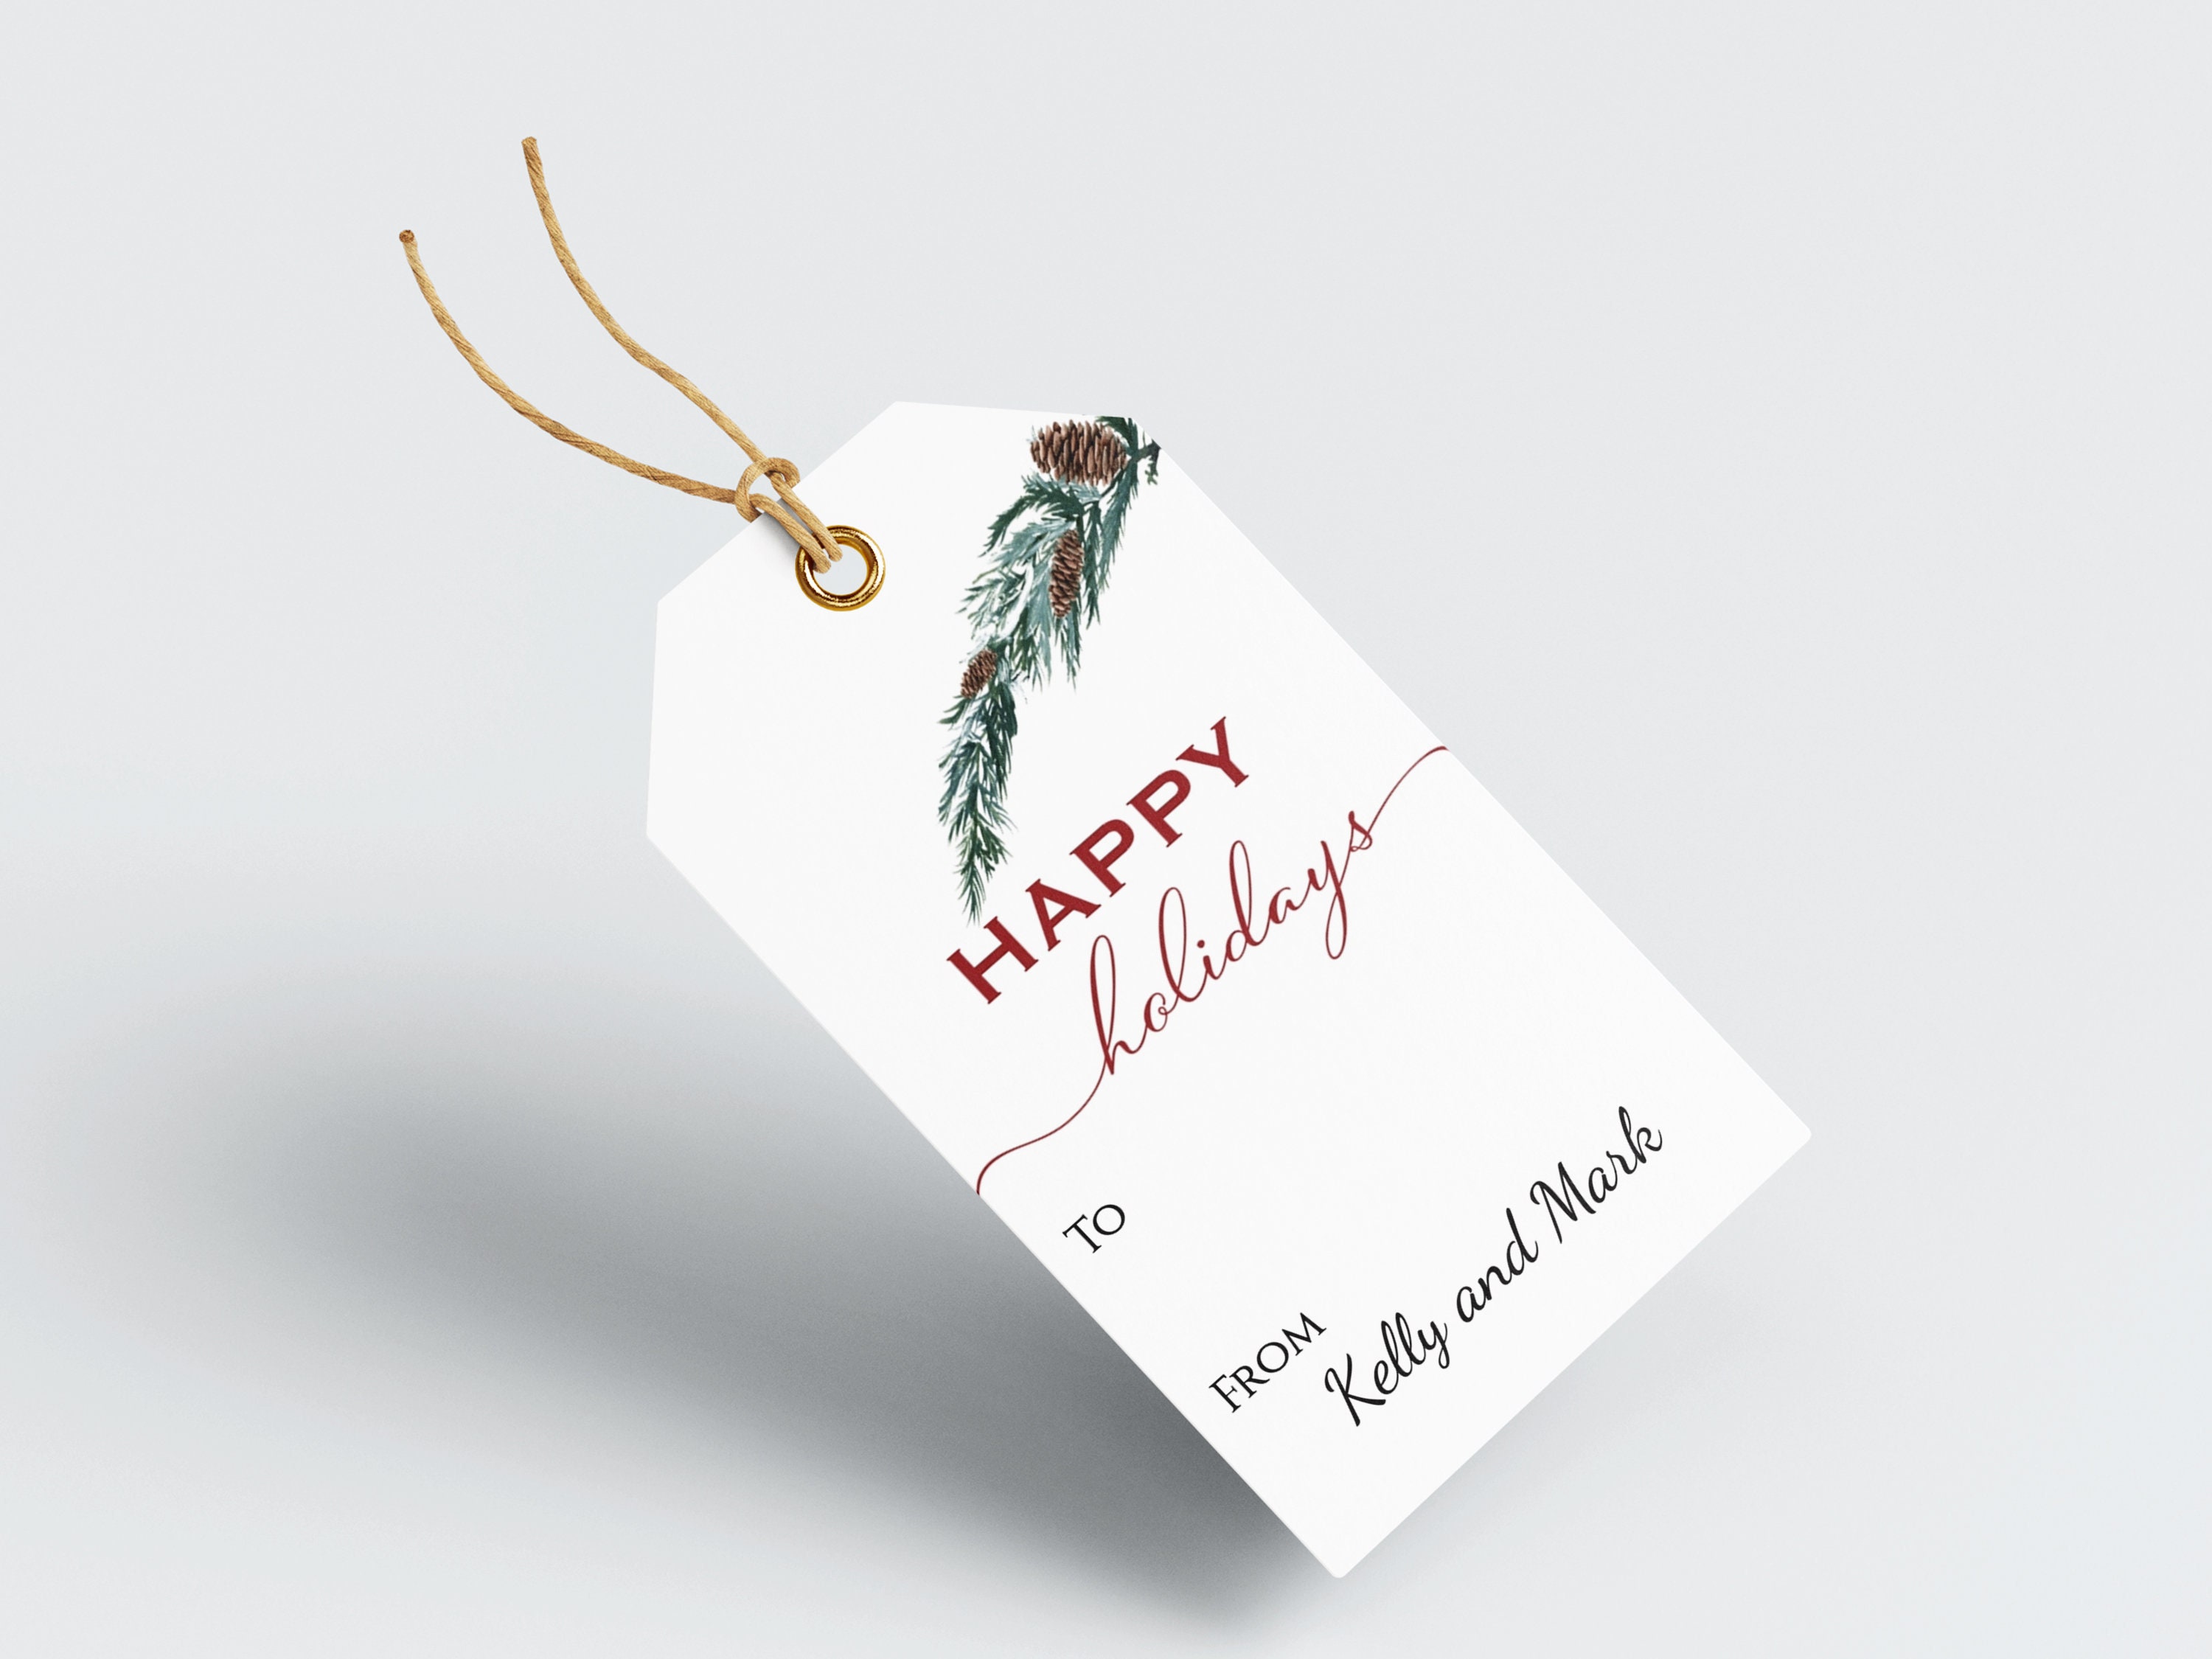 Christmas Gift Tag, Holiday Gift Tag, Christmas Holly & Pine Tags PRINTED  Gift Tags with string, Holiday Gift Tags